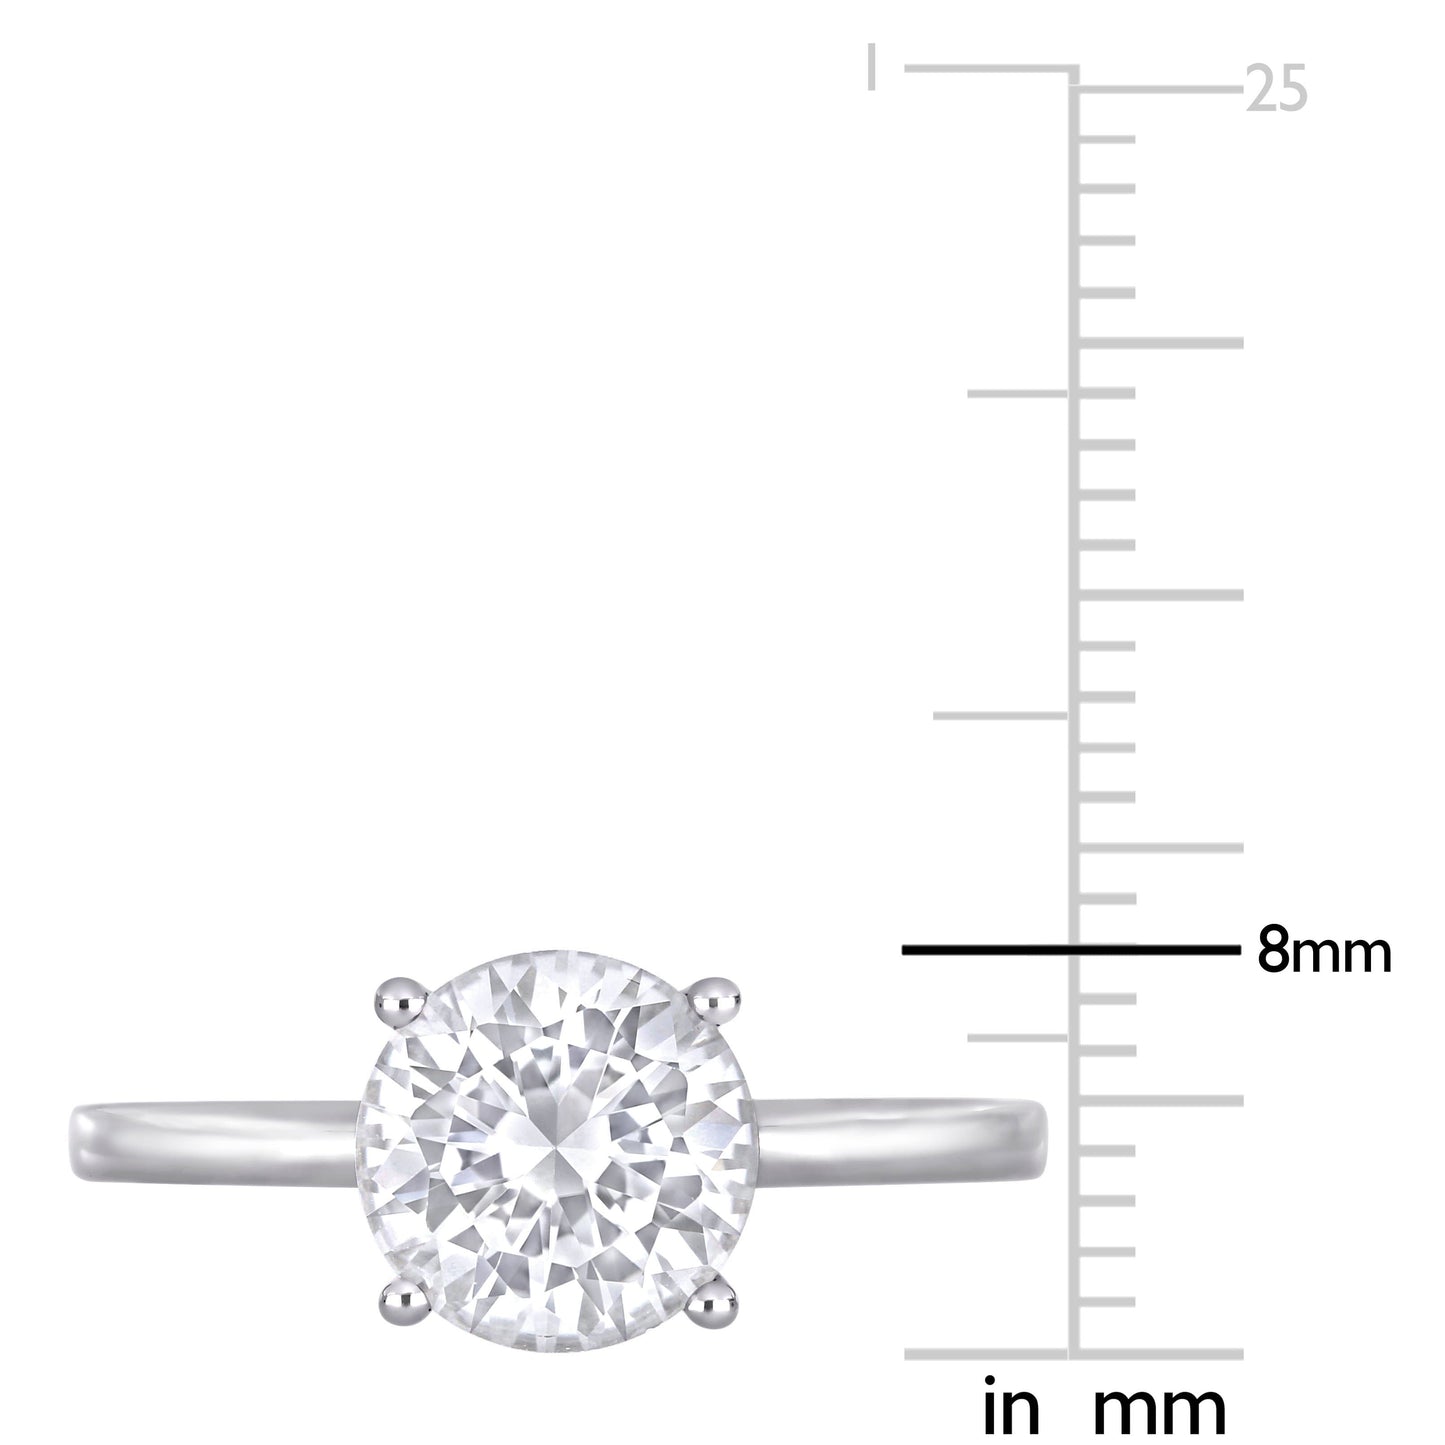 Sophia B 2 3/8ct White Sapphire Engagement Ring